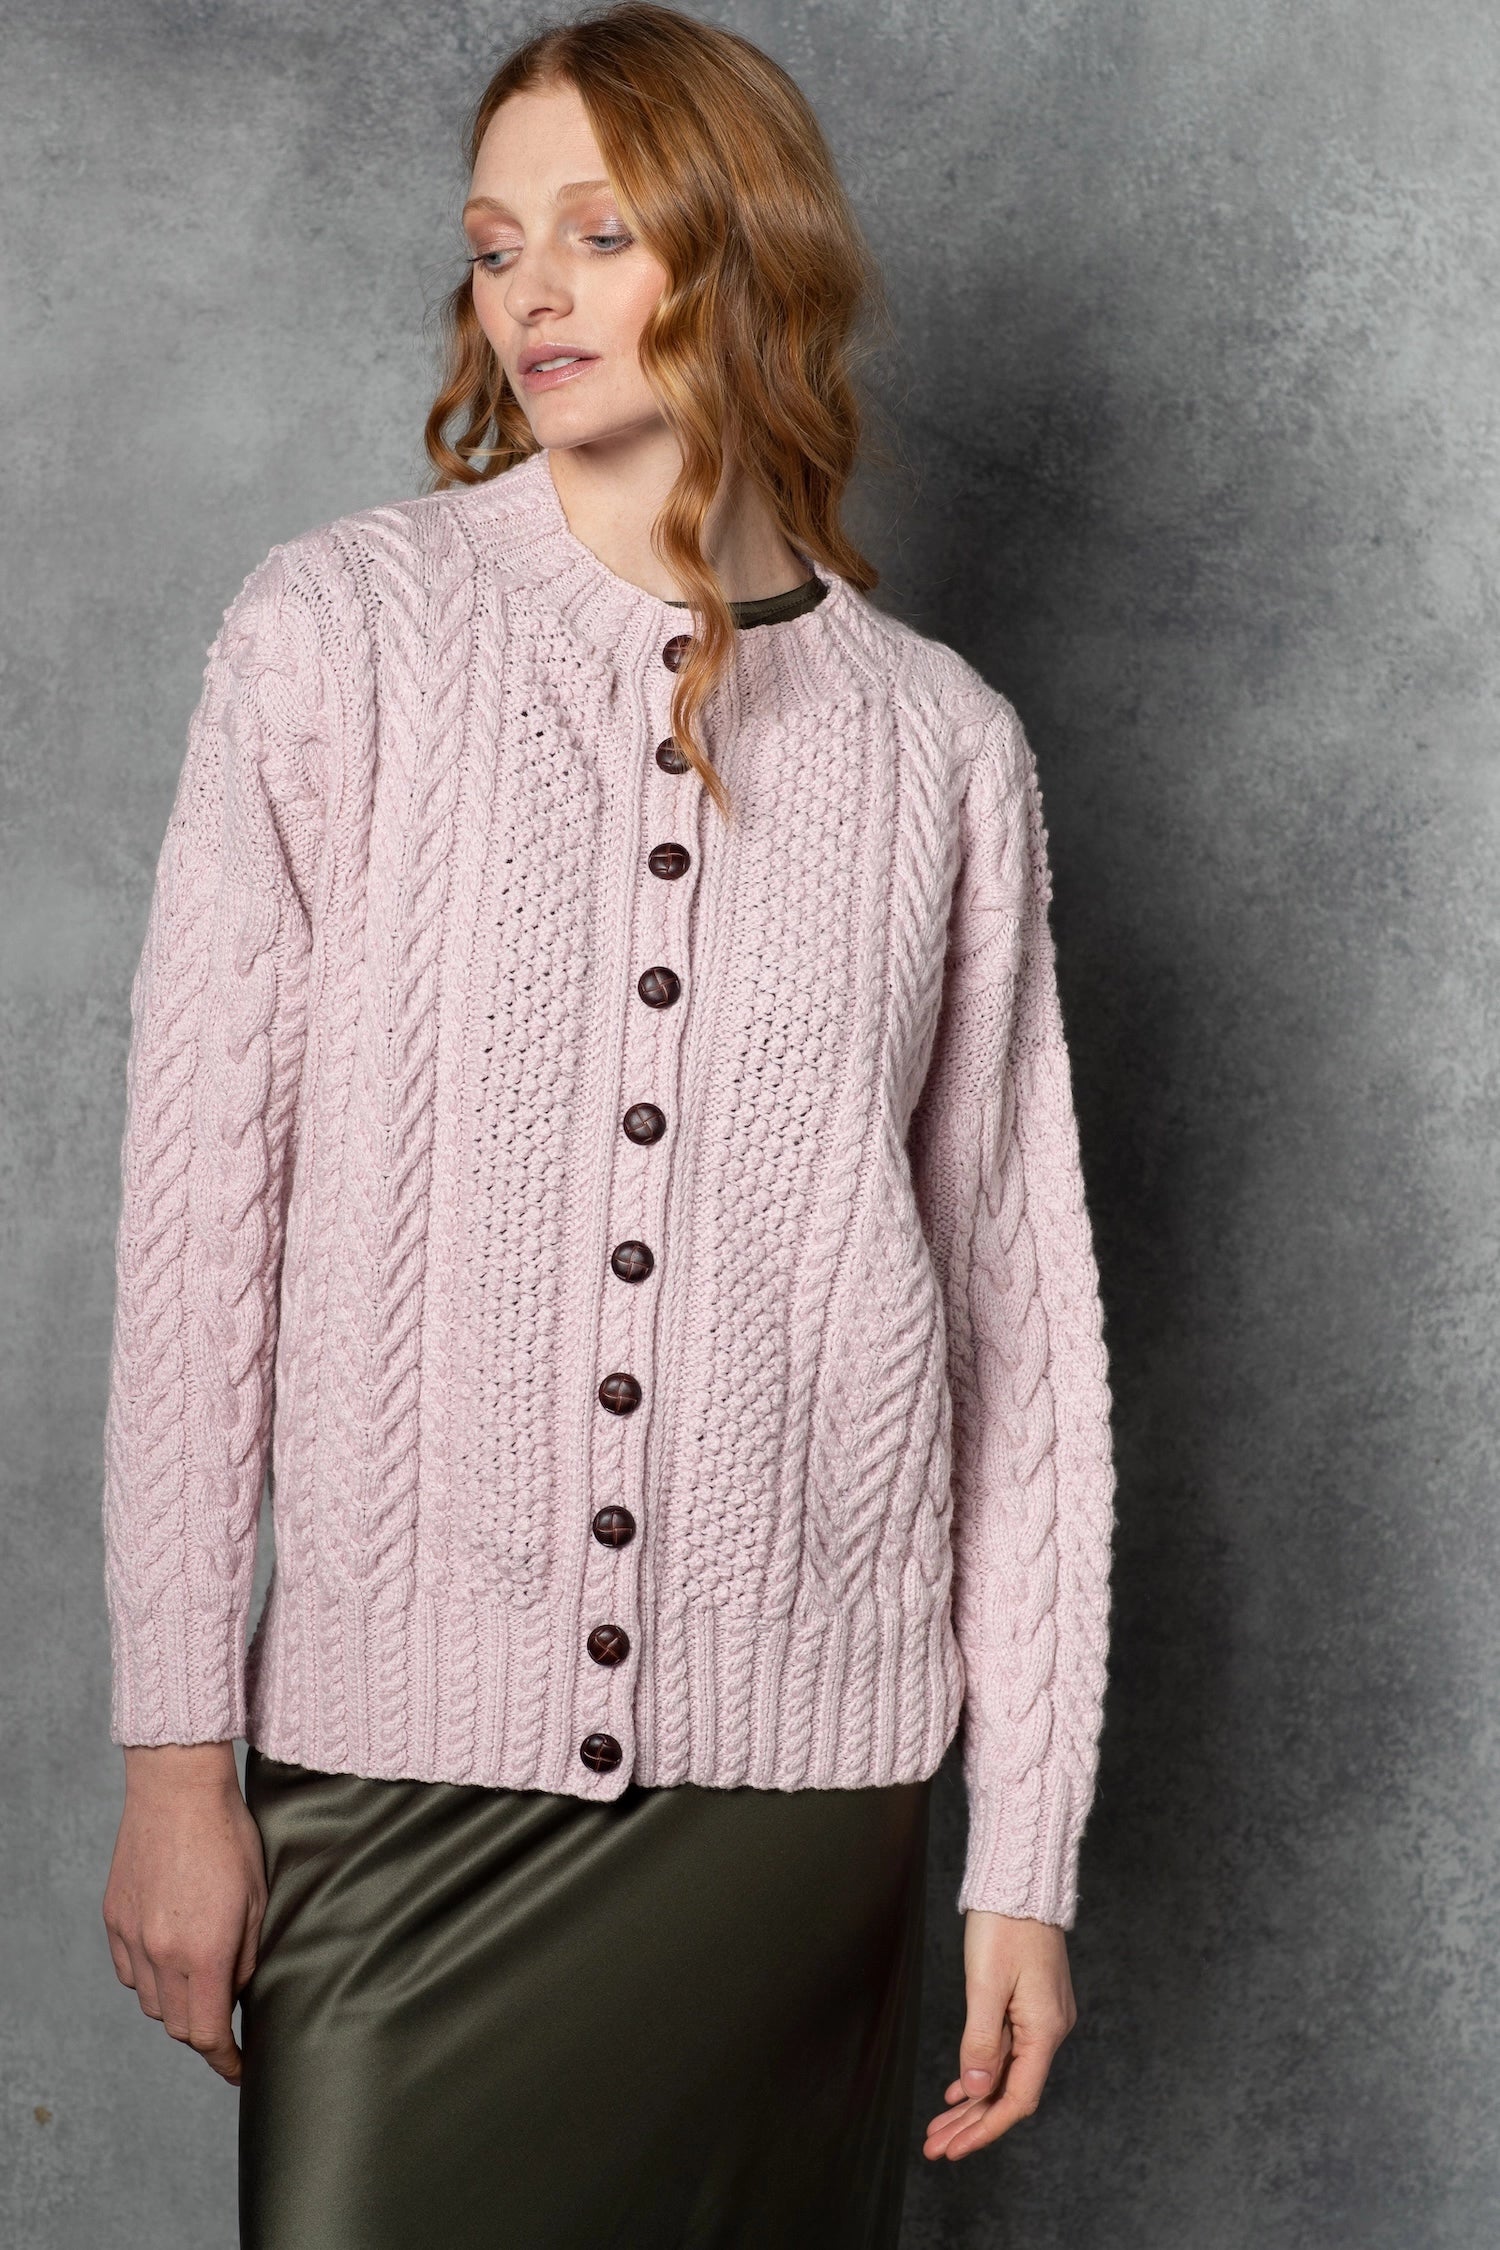 Dúchas Cashmere Aran Sweater  Made in Ireland – Madigan Cashmere